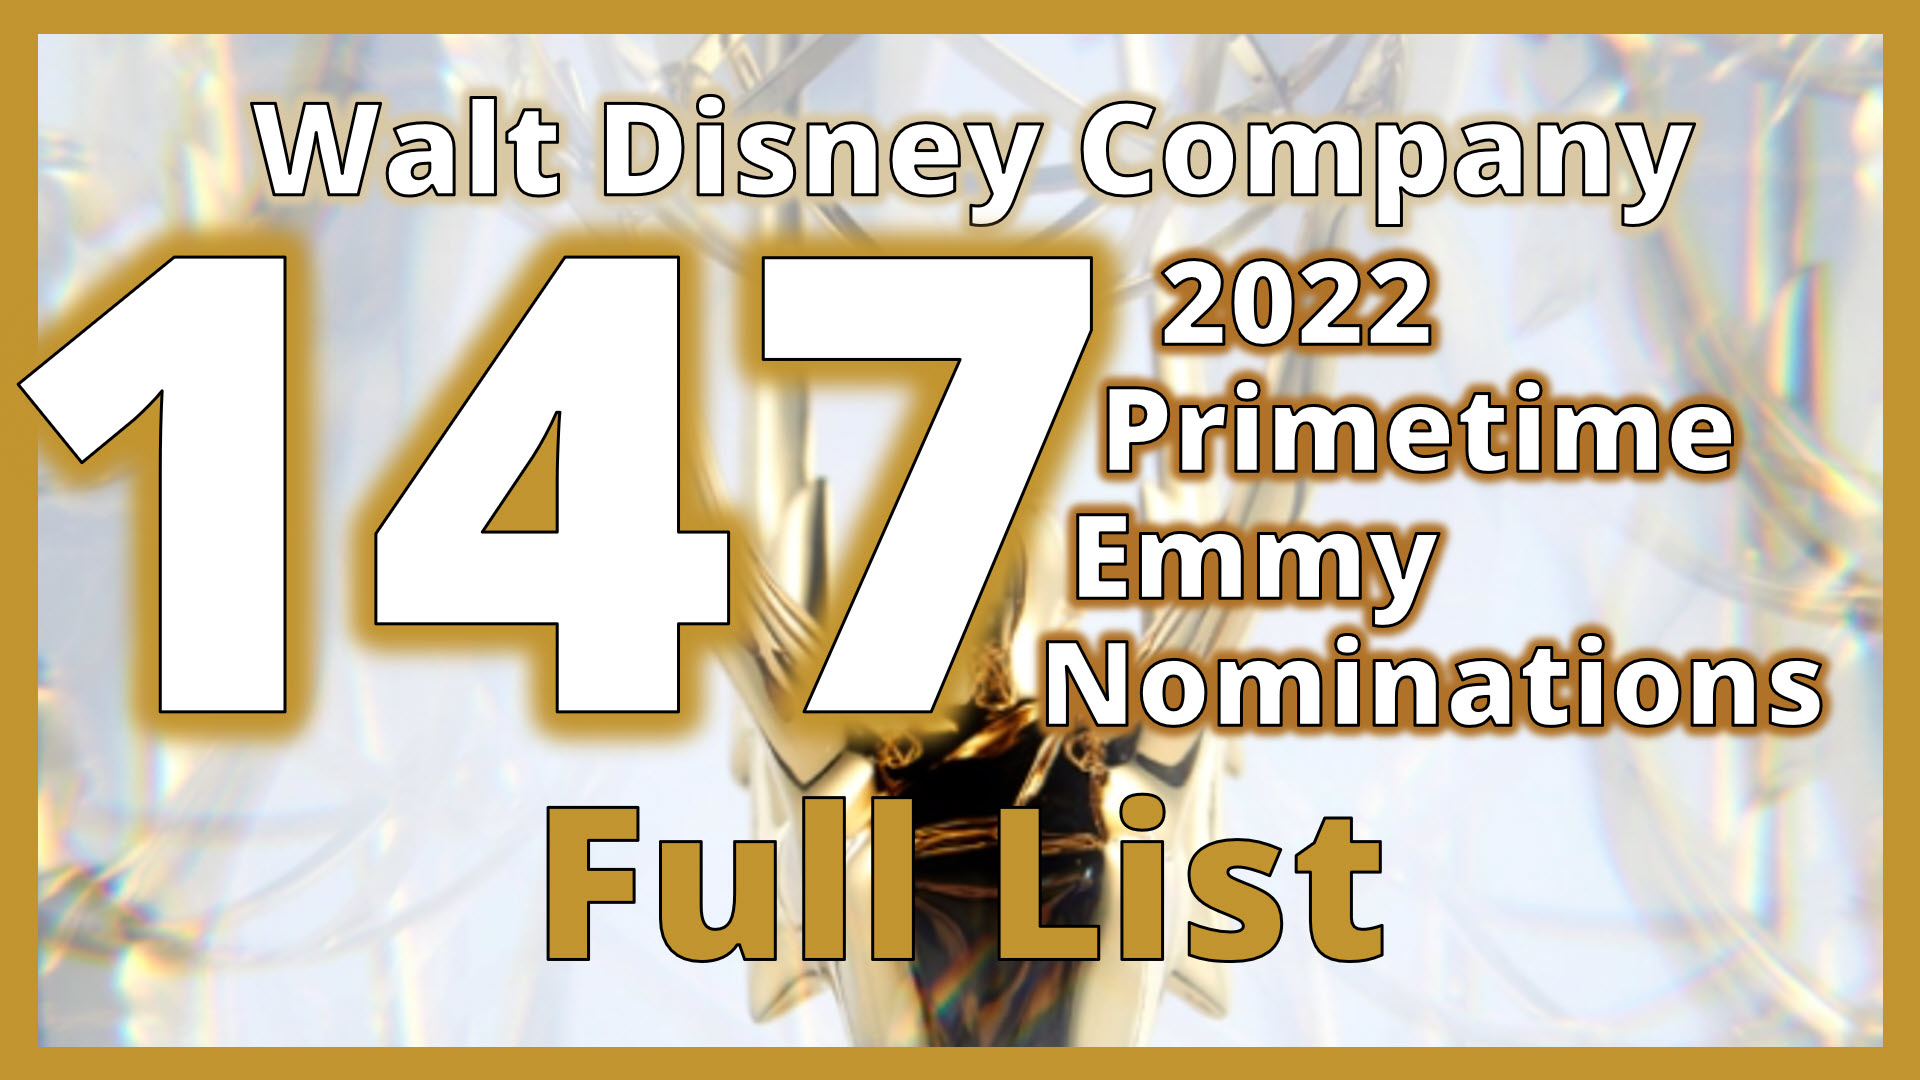 Walt Disney Company Receives 147 2022 Prime Time Emmy nominations